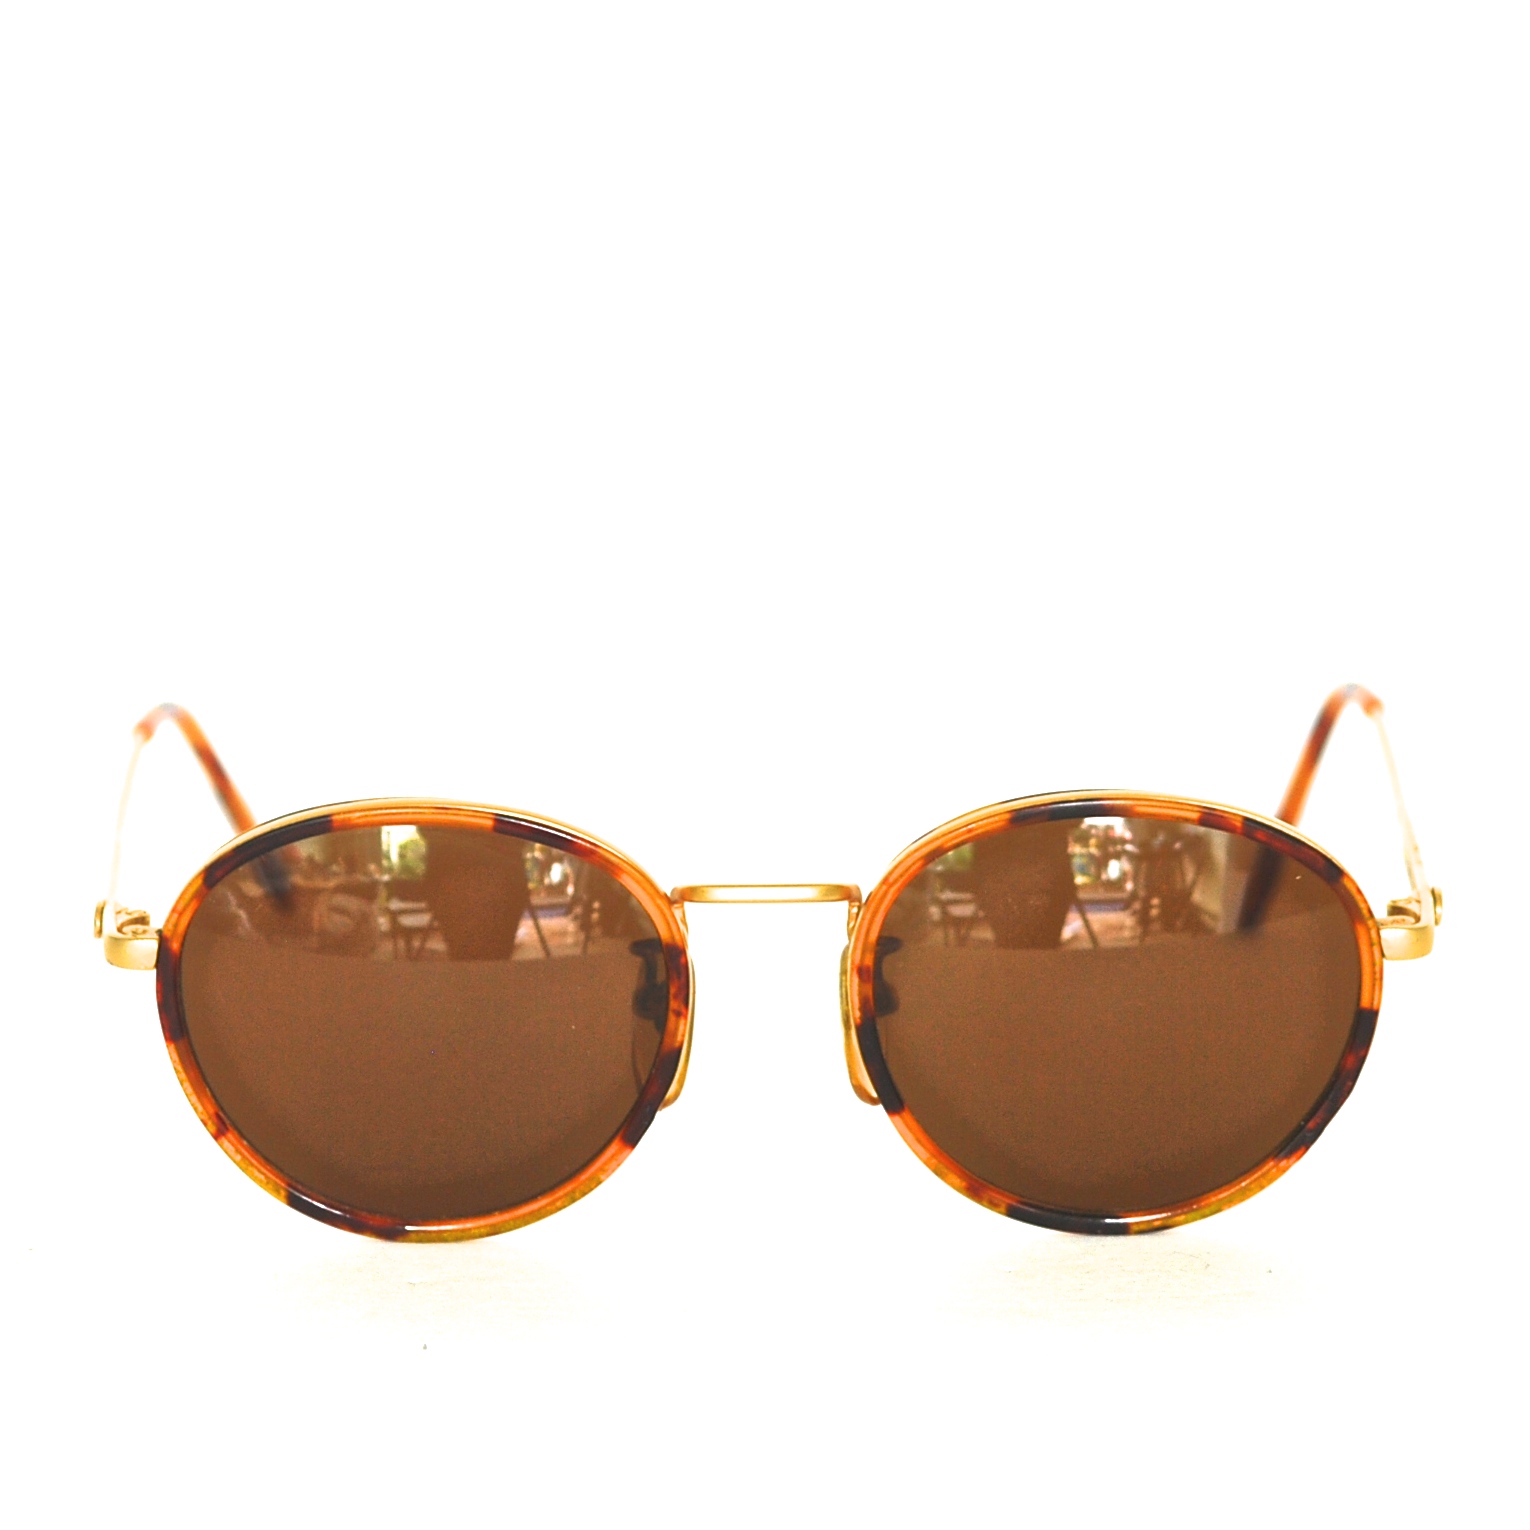 Anne Klein Ii Vintage Gold Tone Sunglasses With Tortoise Frames Quiet West